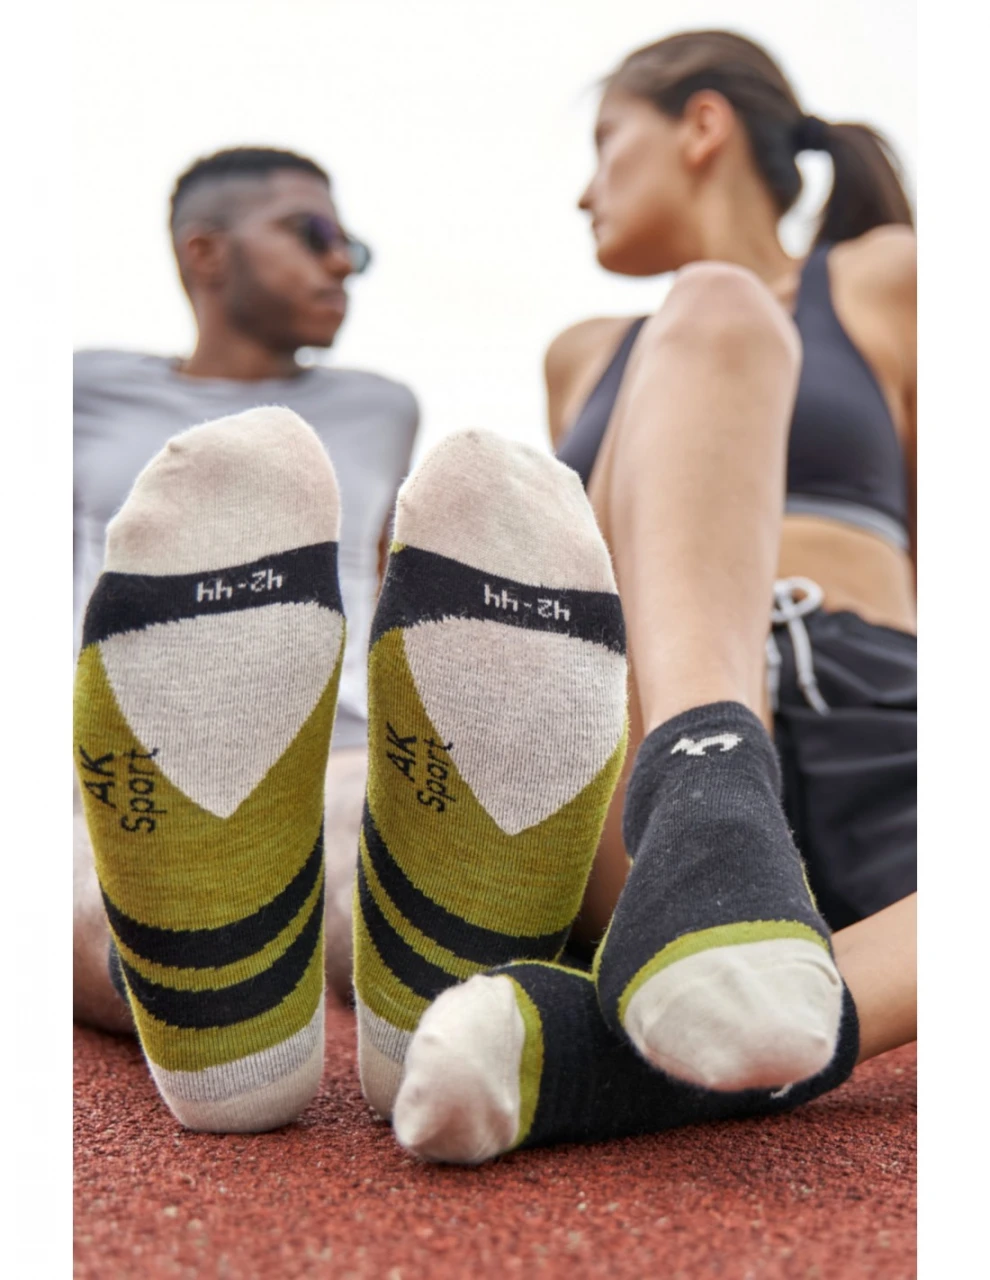 Unisex Premium SPORT sneaker socks in Alpaca and Pima Cotton blend